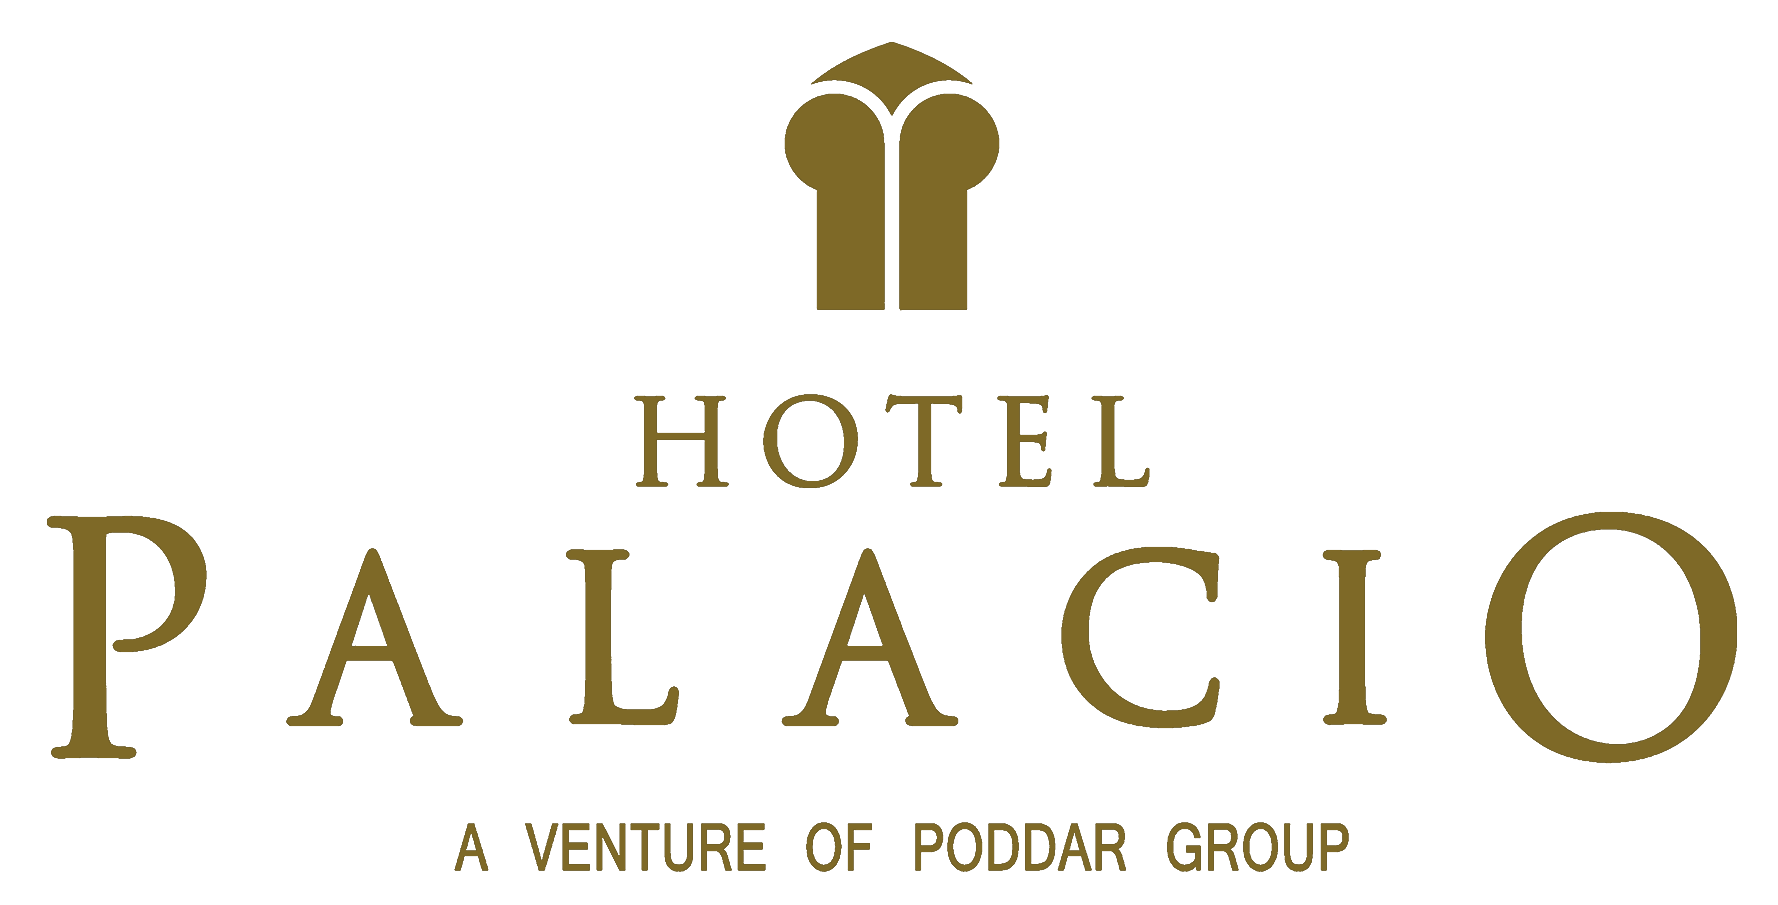 The Hotel Palacio|Resort|Accomodation